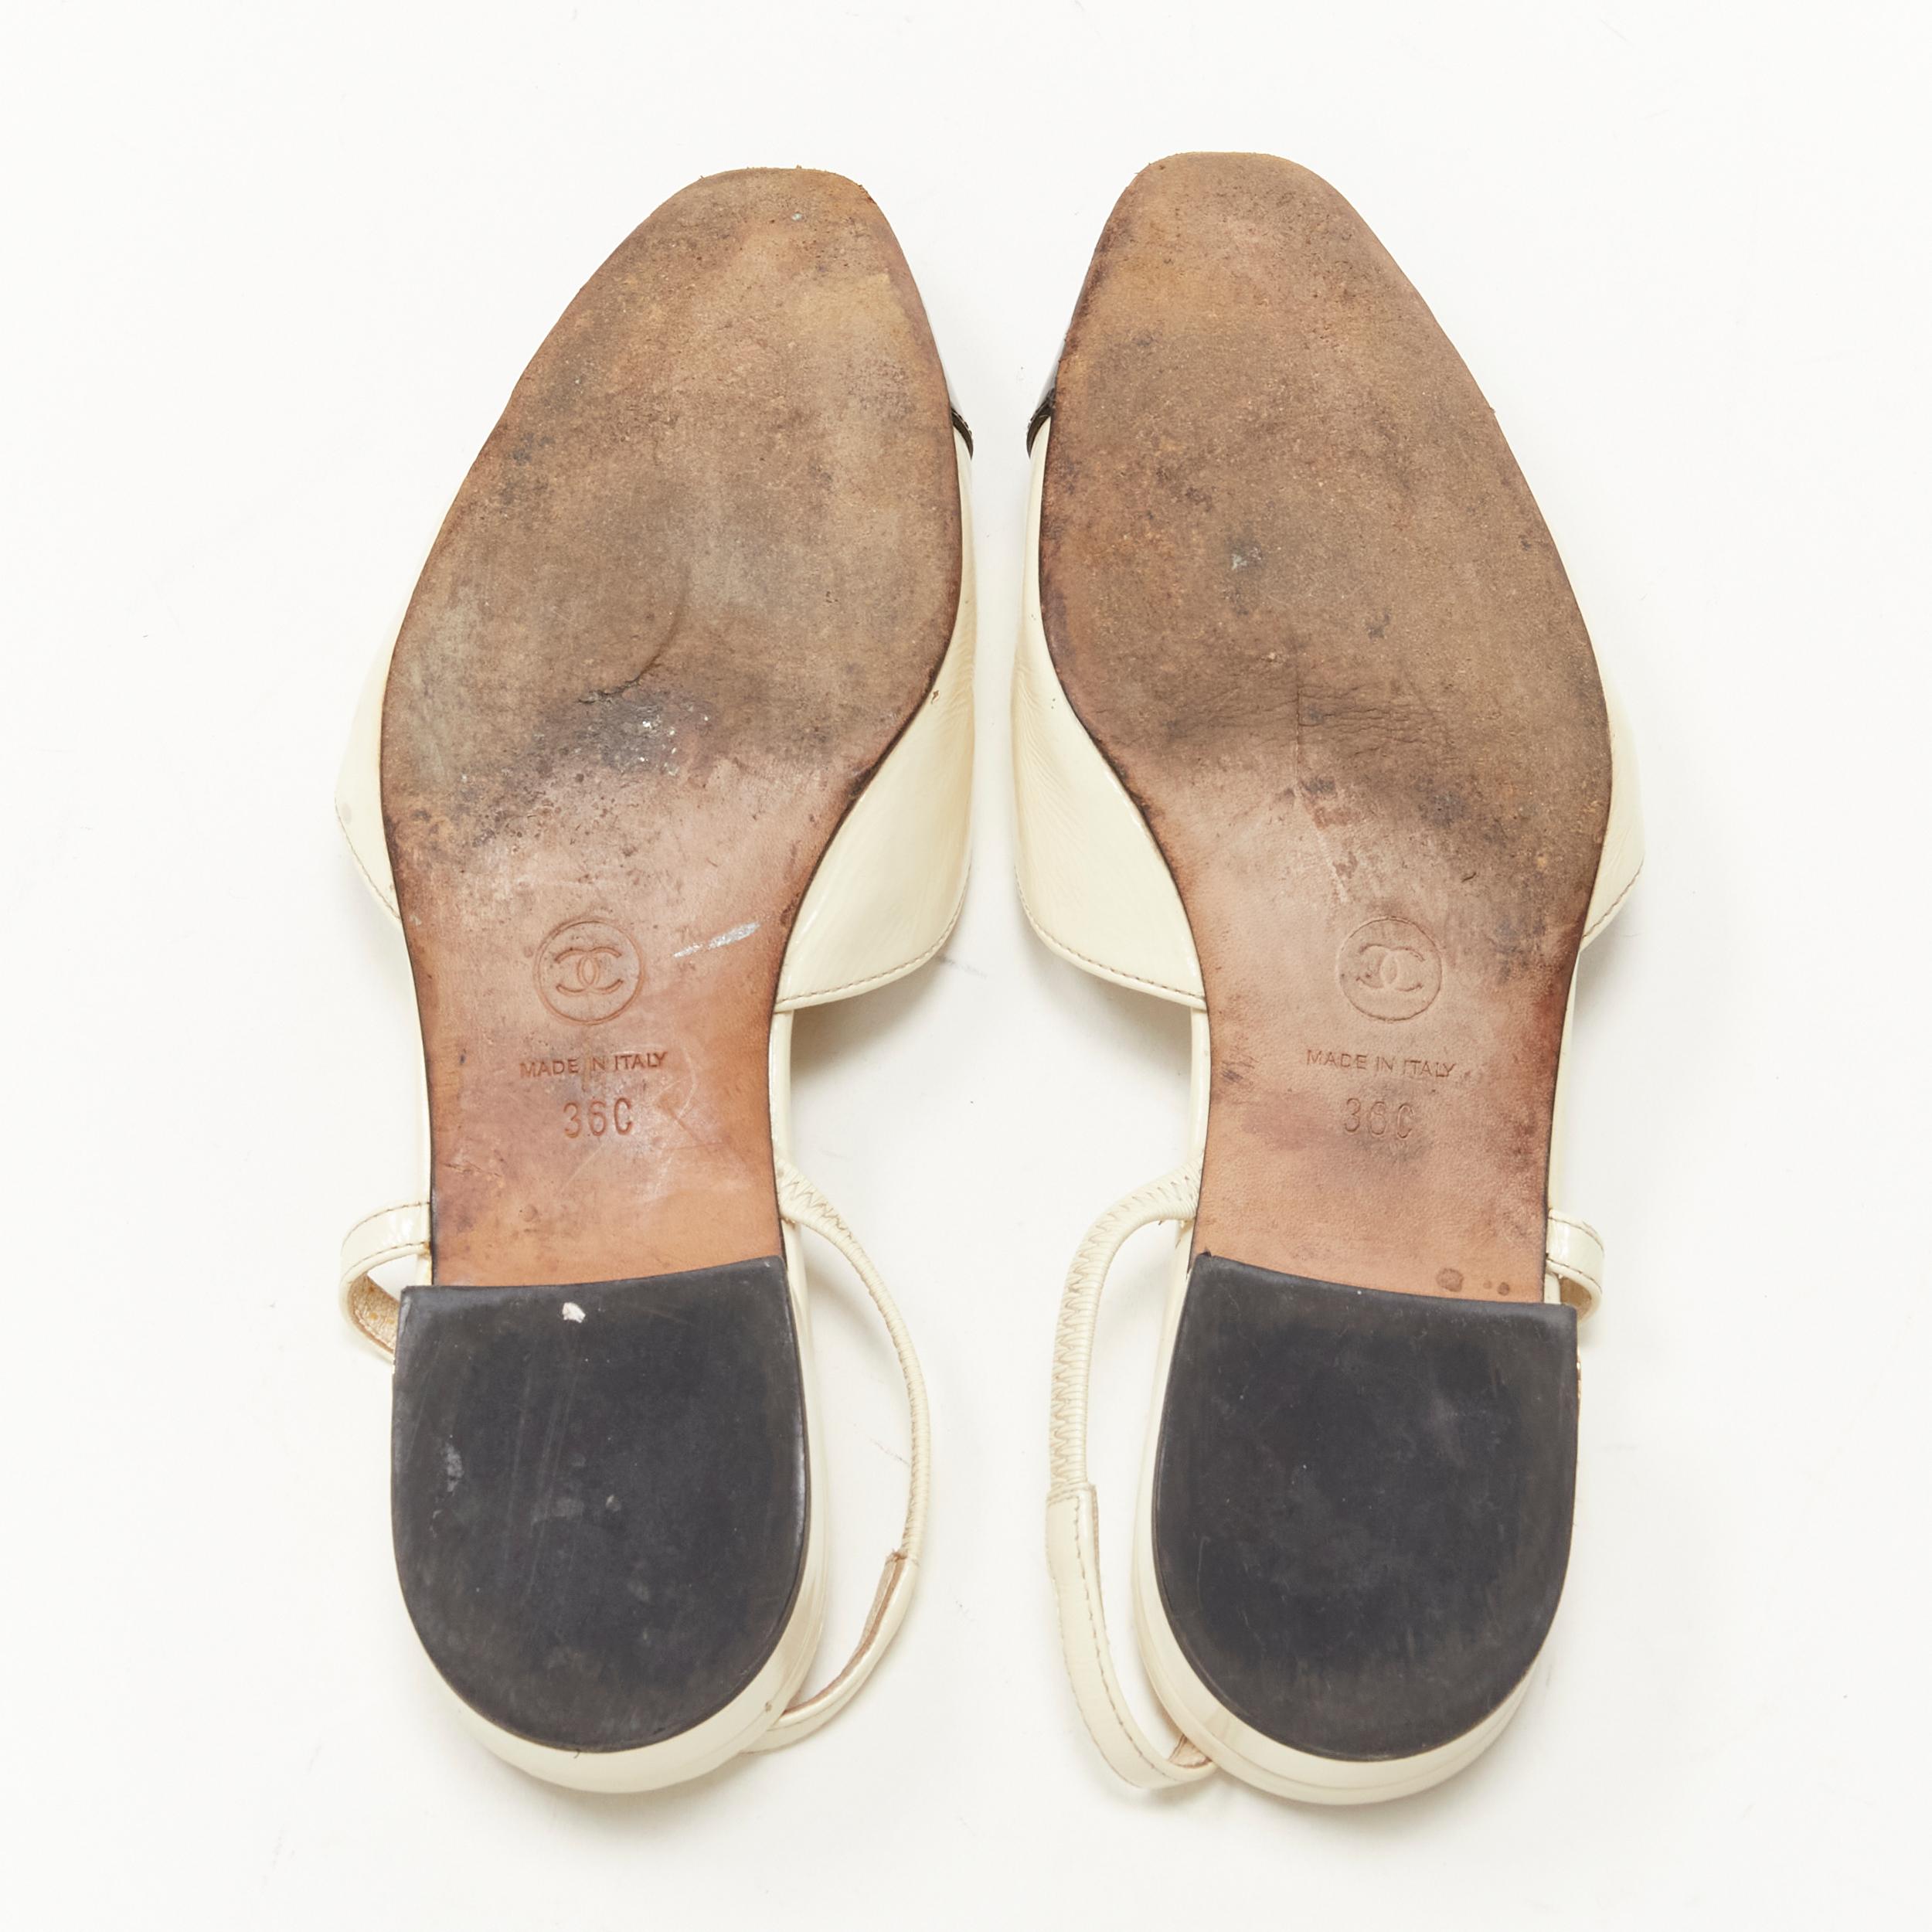 CHANEL ivory black toe cap patent leather sling back CC heel flats EU36 4